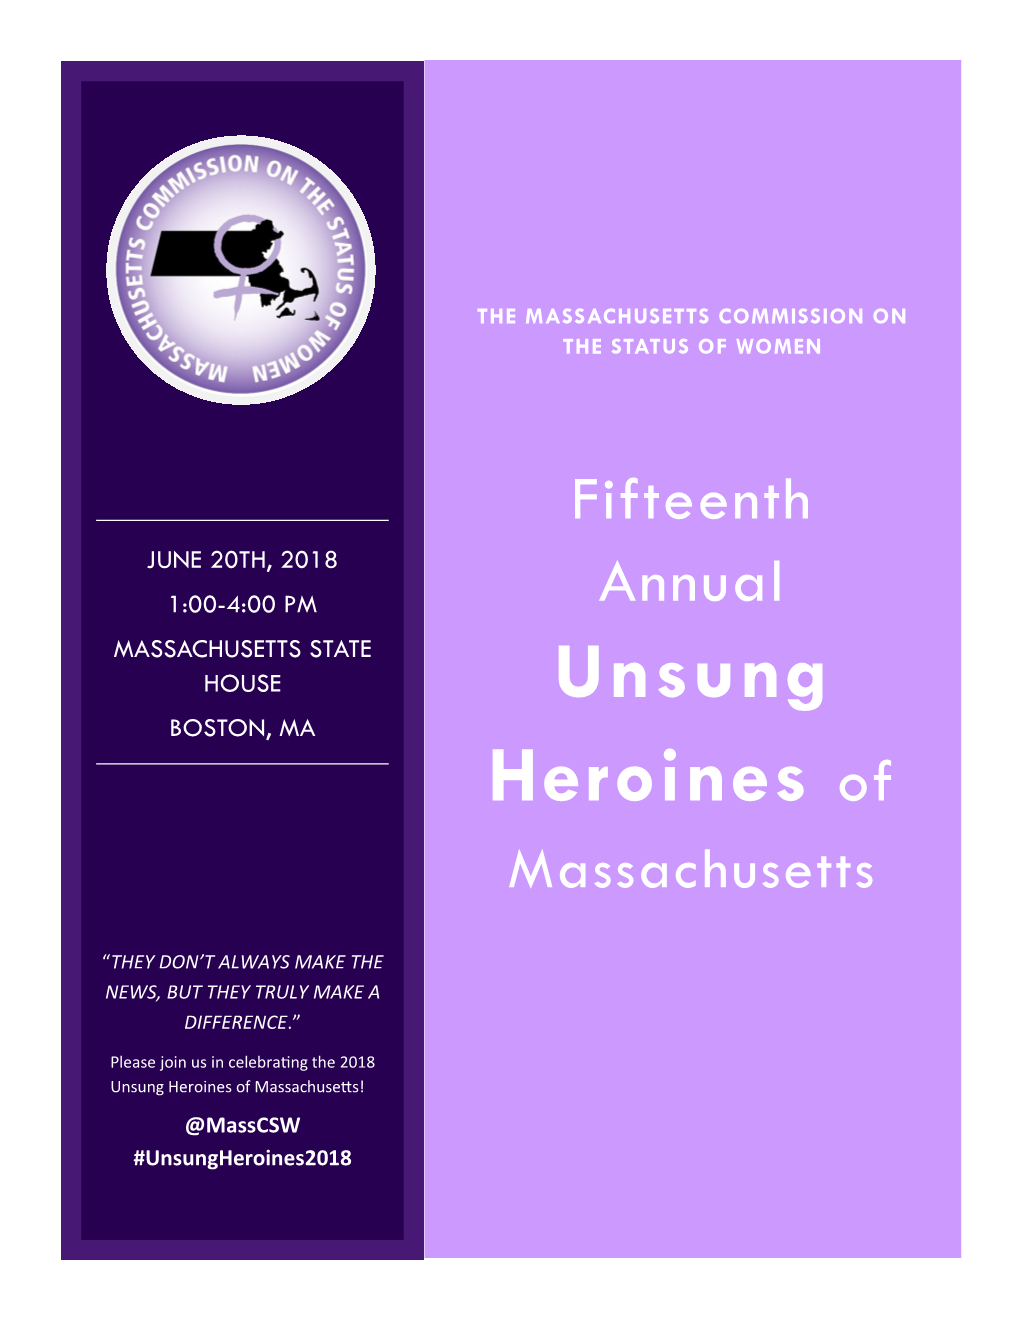 Unsung Heroines of Massachusetts! @Masscsw #Unsungheroines2018